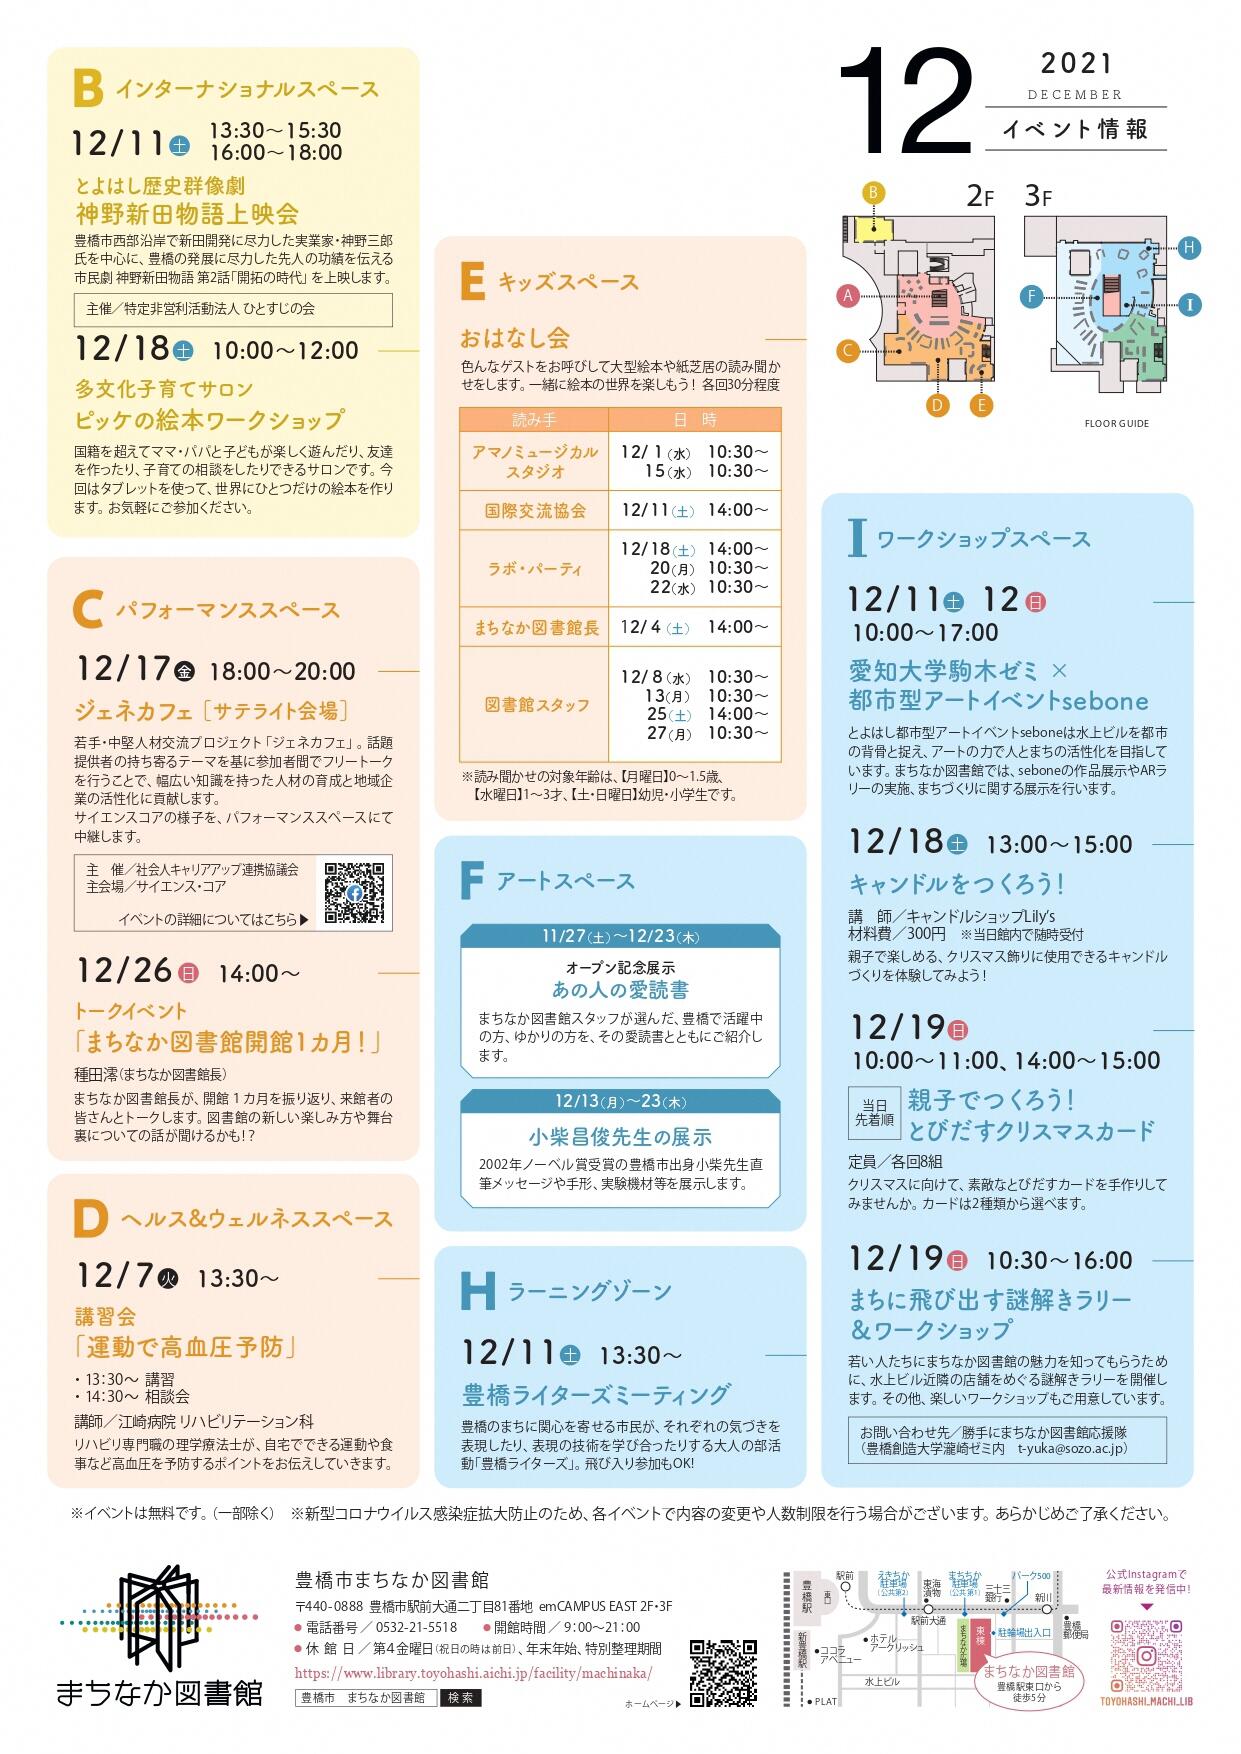 https://www.library.toyohashi.aichi.jp/facility/machinaka/event/d756af6c0a7060c061763a850f449641.jpg